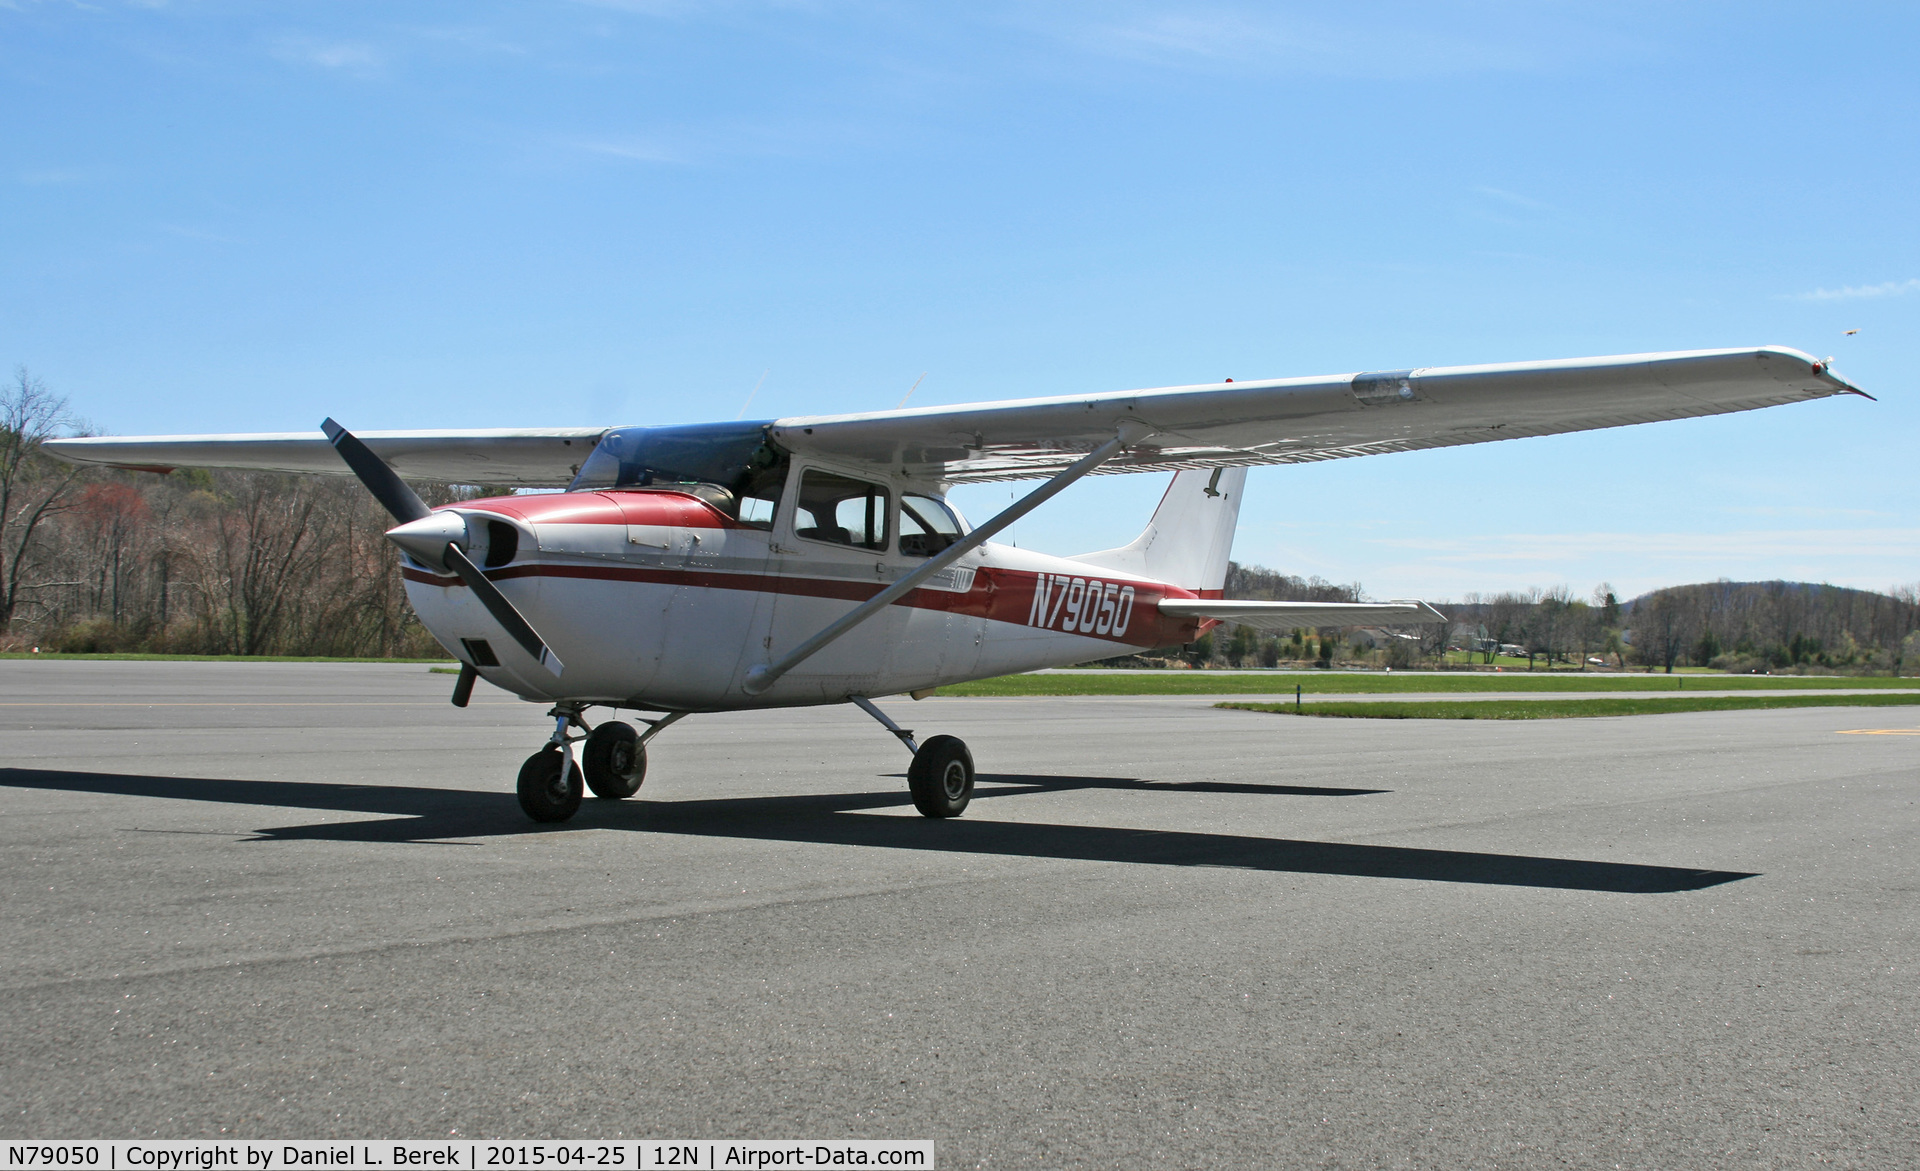 N79050, 1969 Cessna 172K Skyhawk C/N 17257843, Built in 1969, this Skyhawk still looks very sharp.